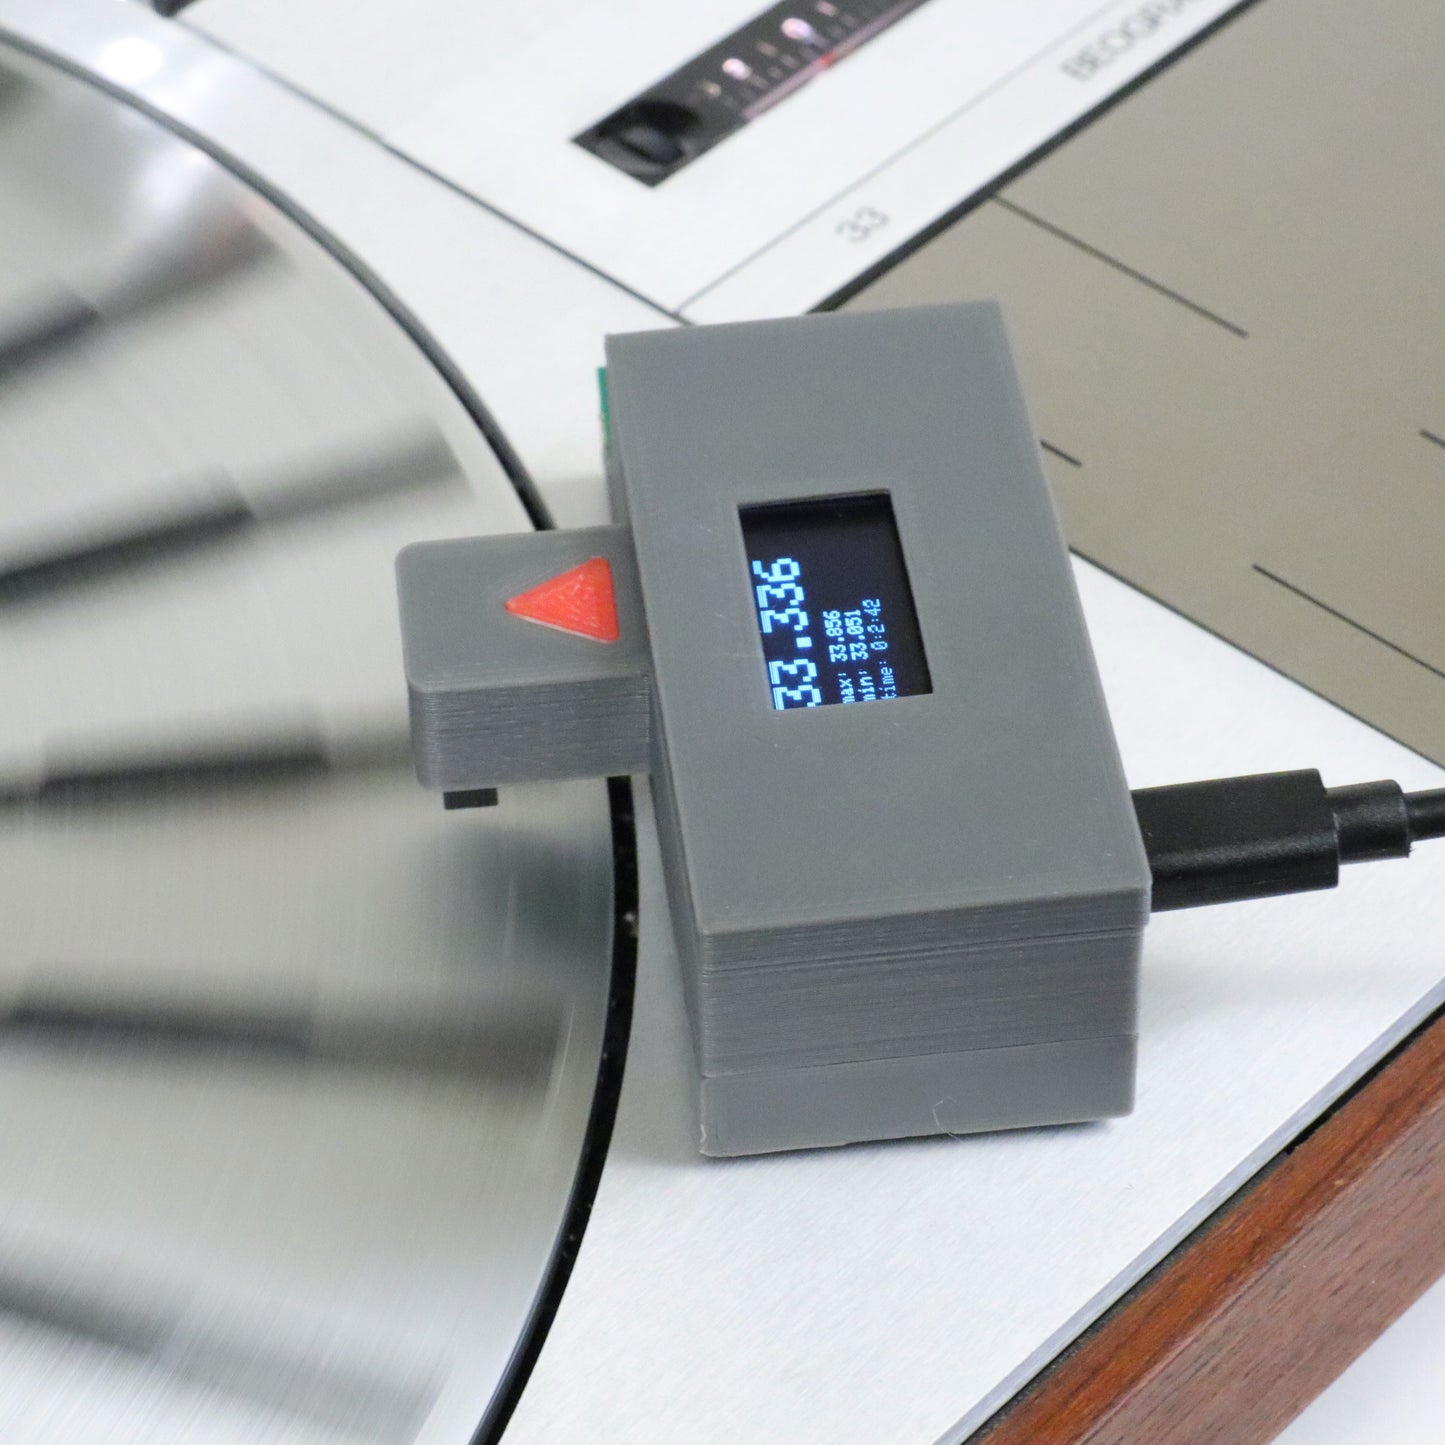 BeoloverRPM - Precise RPM Calibration for your Beogram